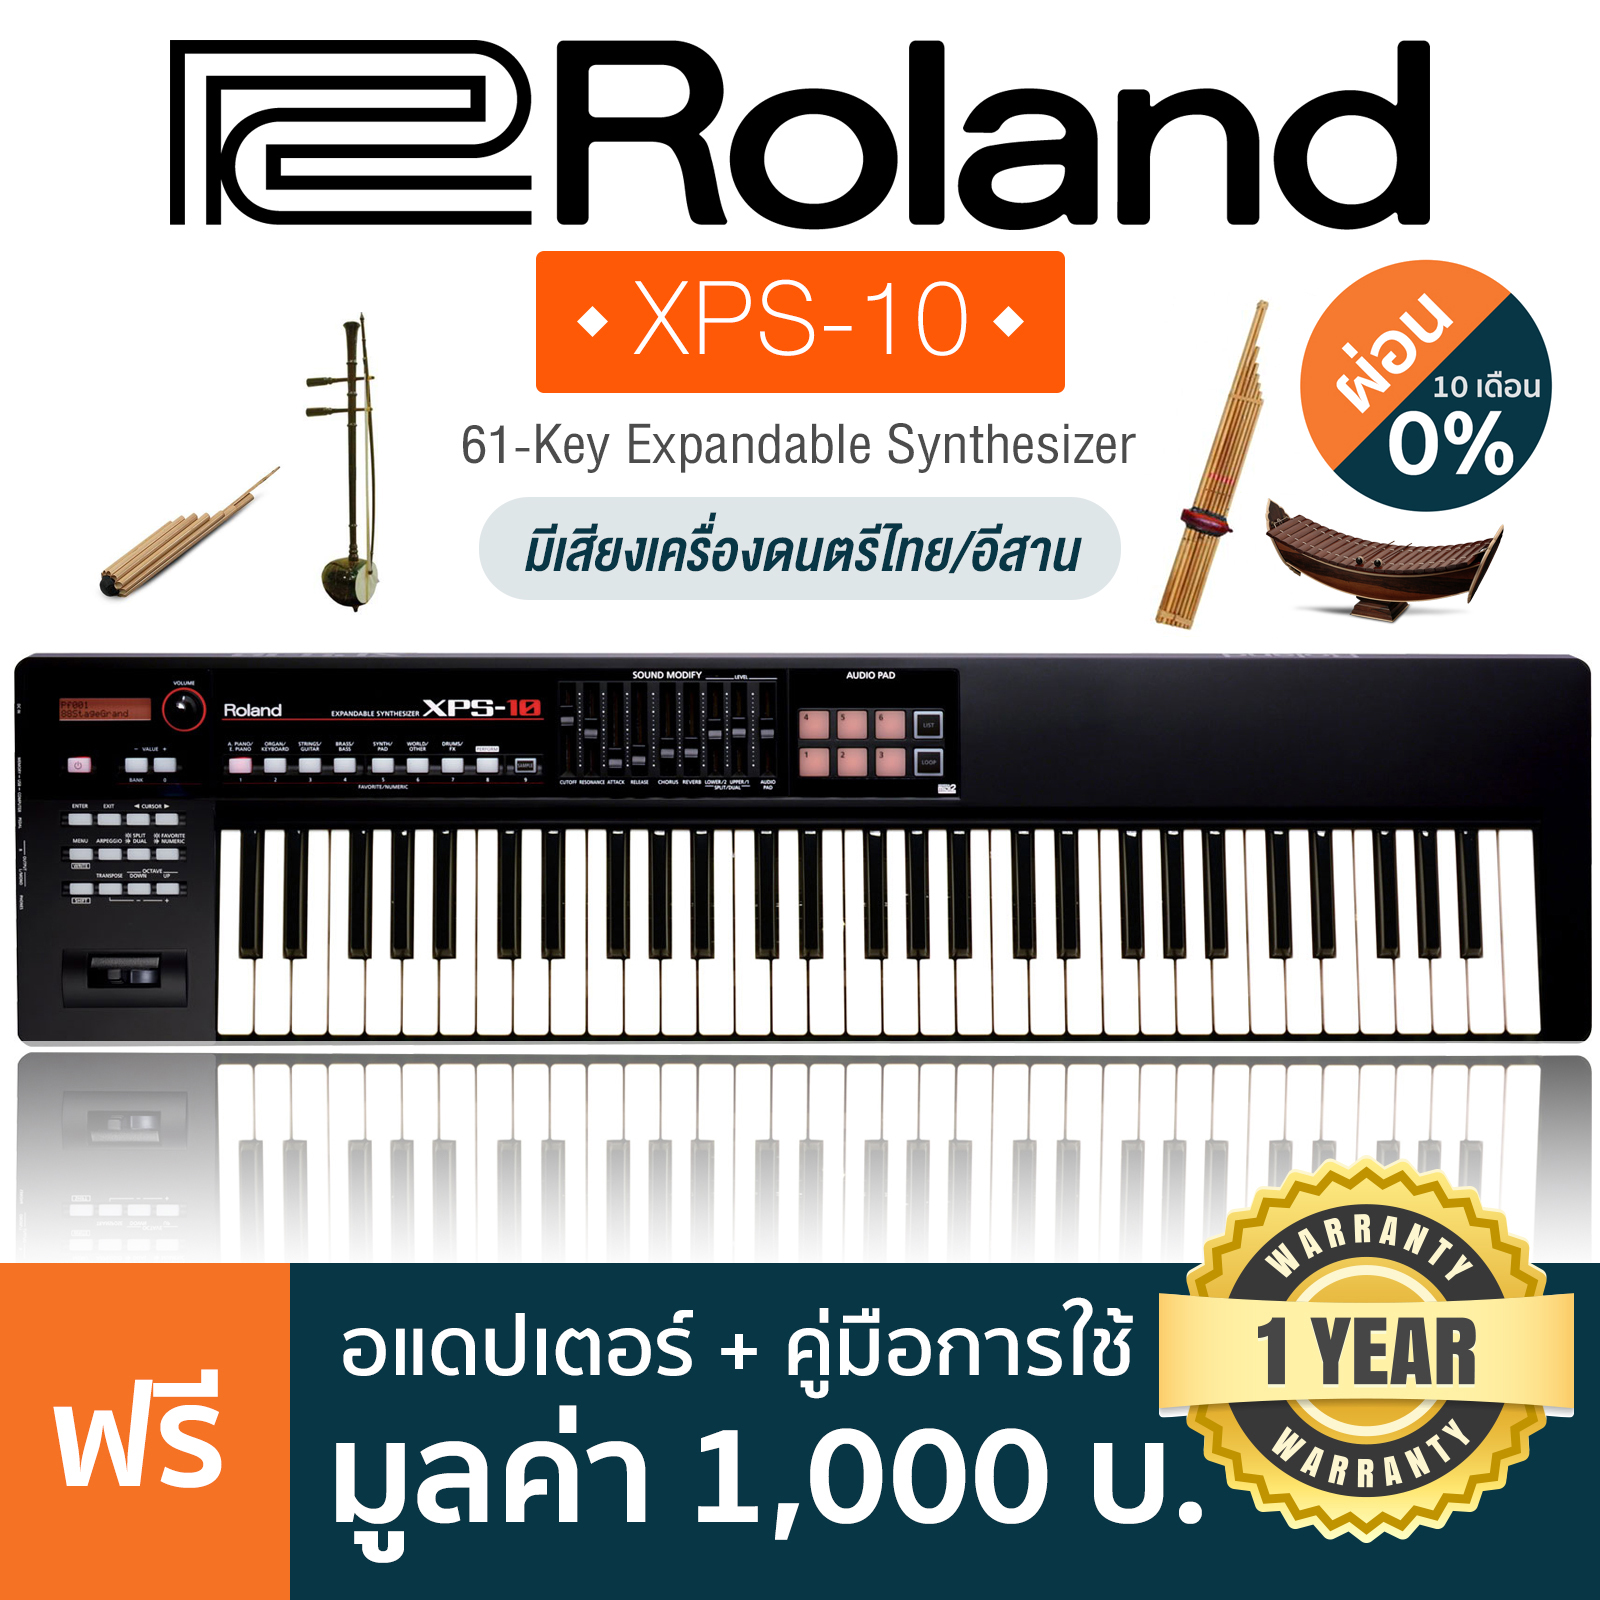 Roland® XPS-10 Synthesizer คีย์บอร์ดซินธีไซเซอร์ 61 คีย์ Patch 1,000++ มีแซ้มเสียงเครื่องดนตรีอีสานและเครื่องดนตรีไทย + แถมฟรีอแดปเตอร์ & คู่มือ ** ประกันศูนย์ 1 ปี **